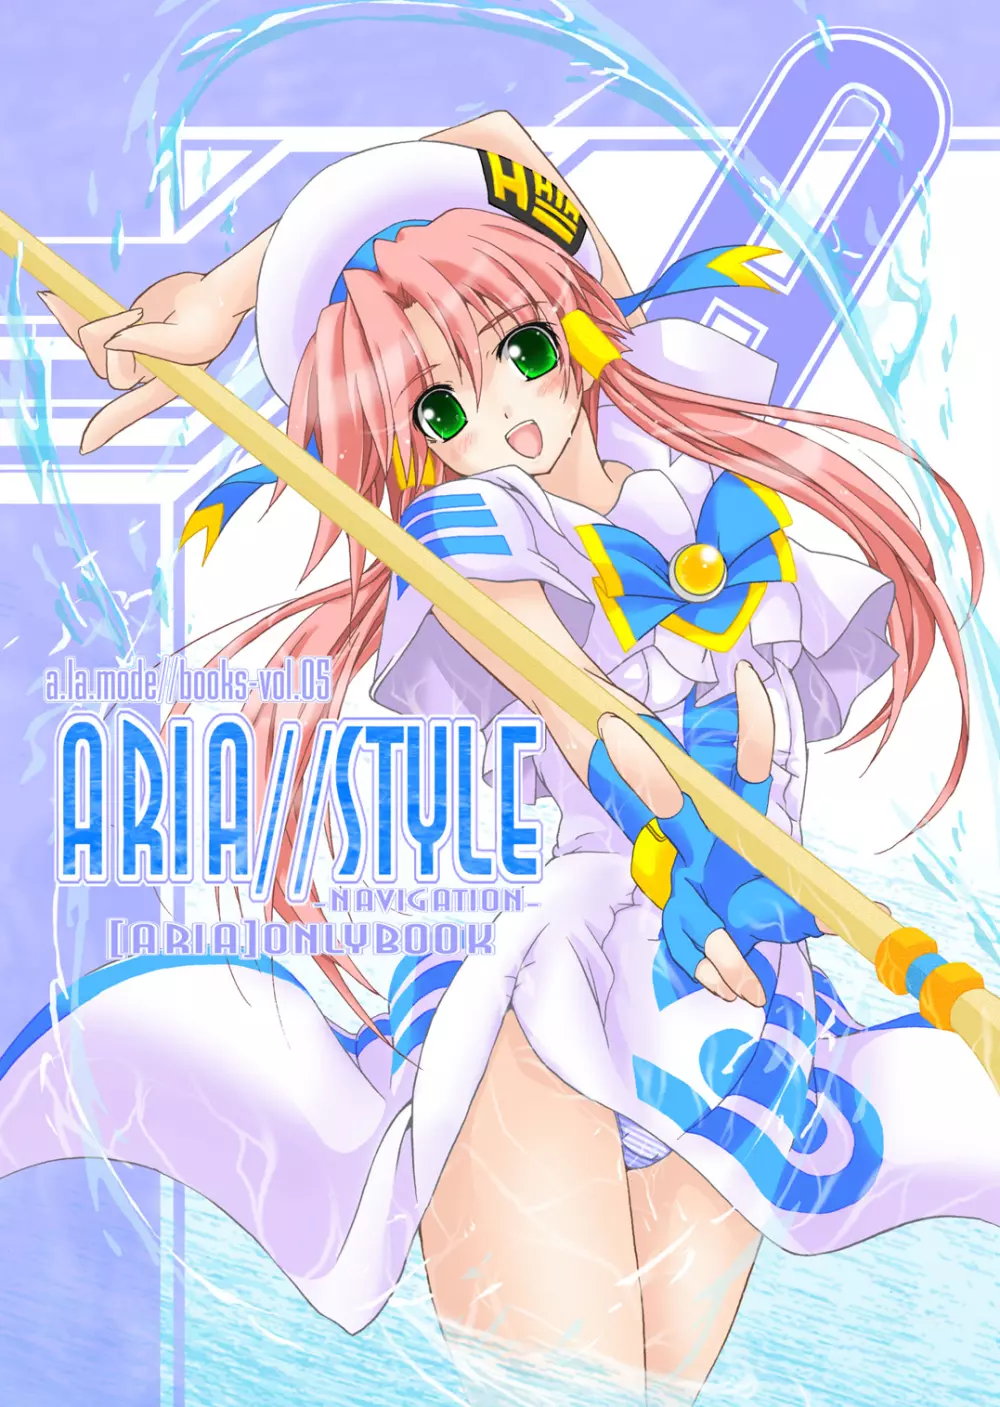 ARIA//Style -Navigation-